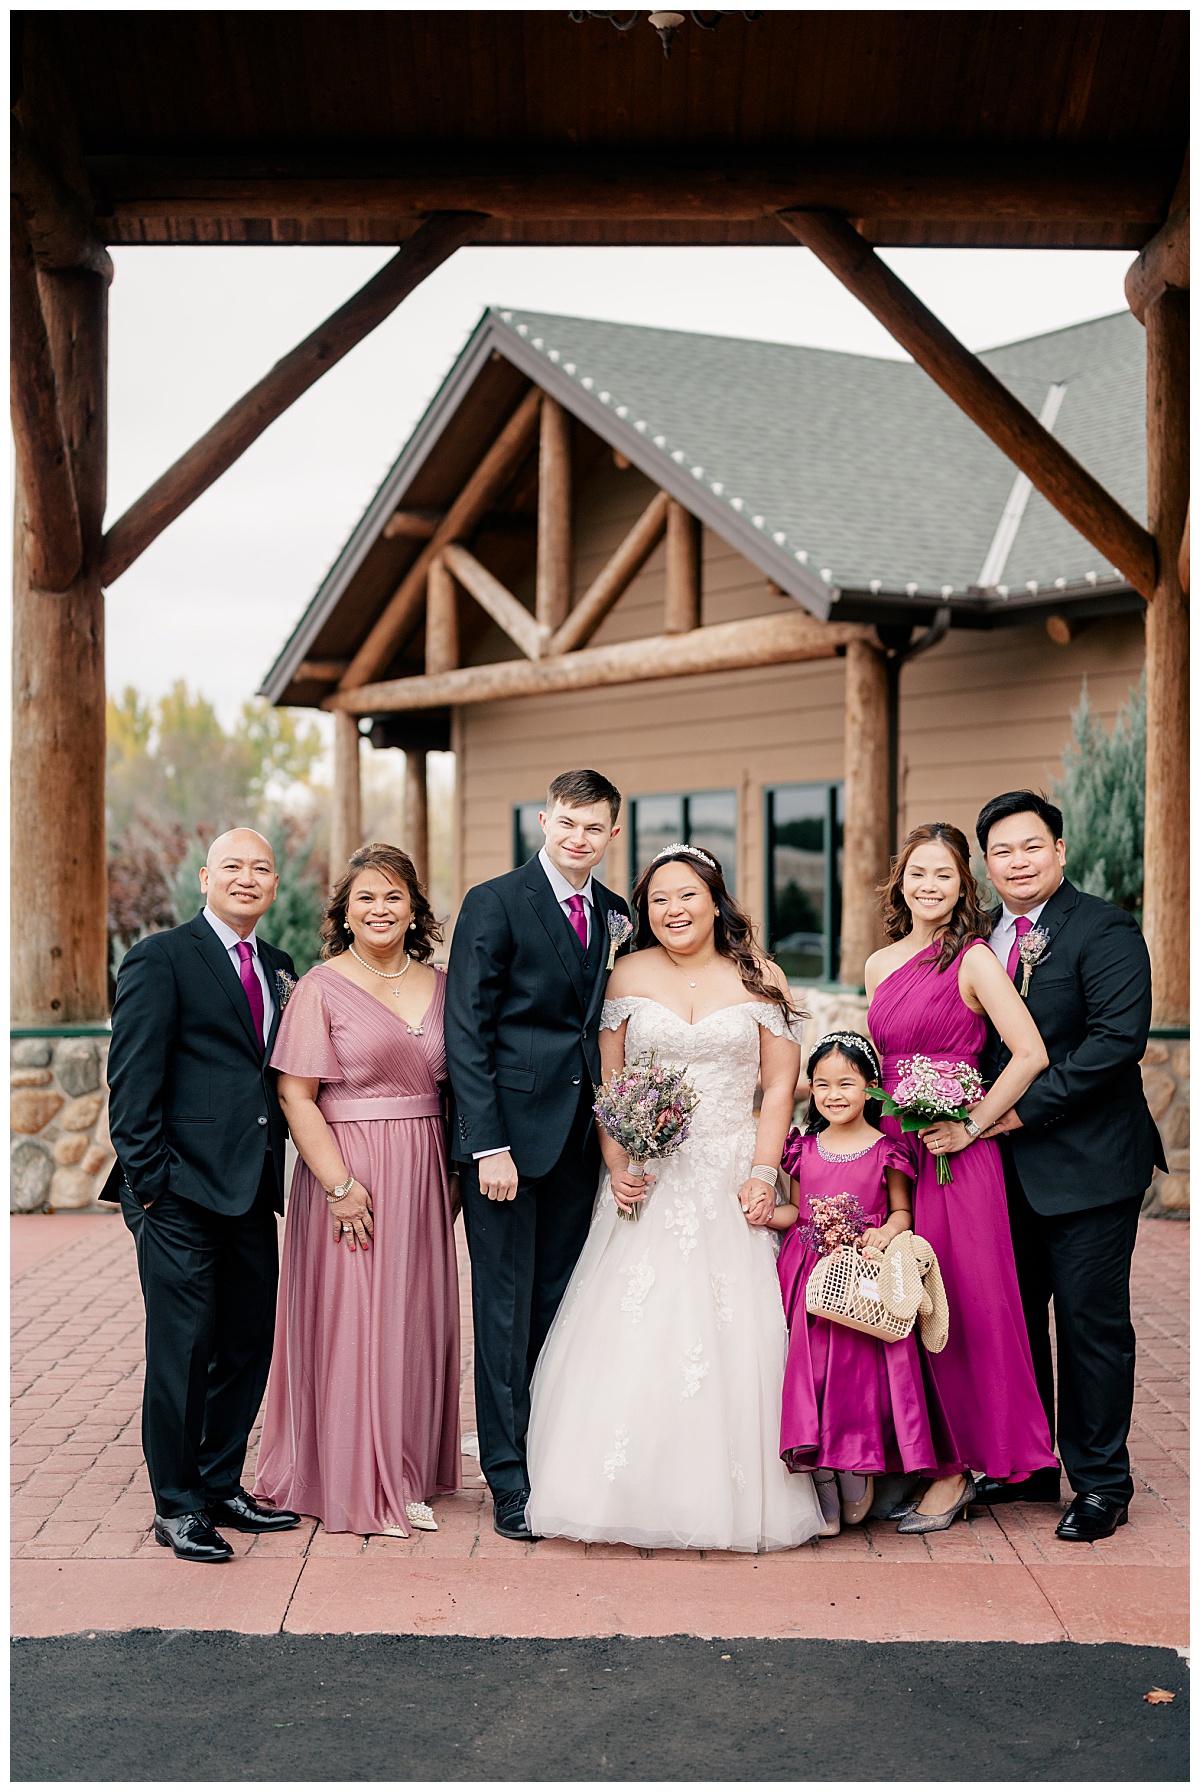 family gathers around newlyweds by Minnesota wedding photographer 